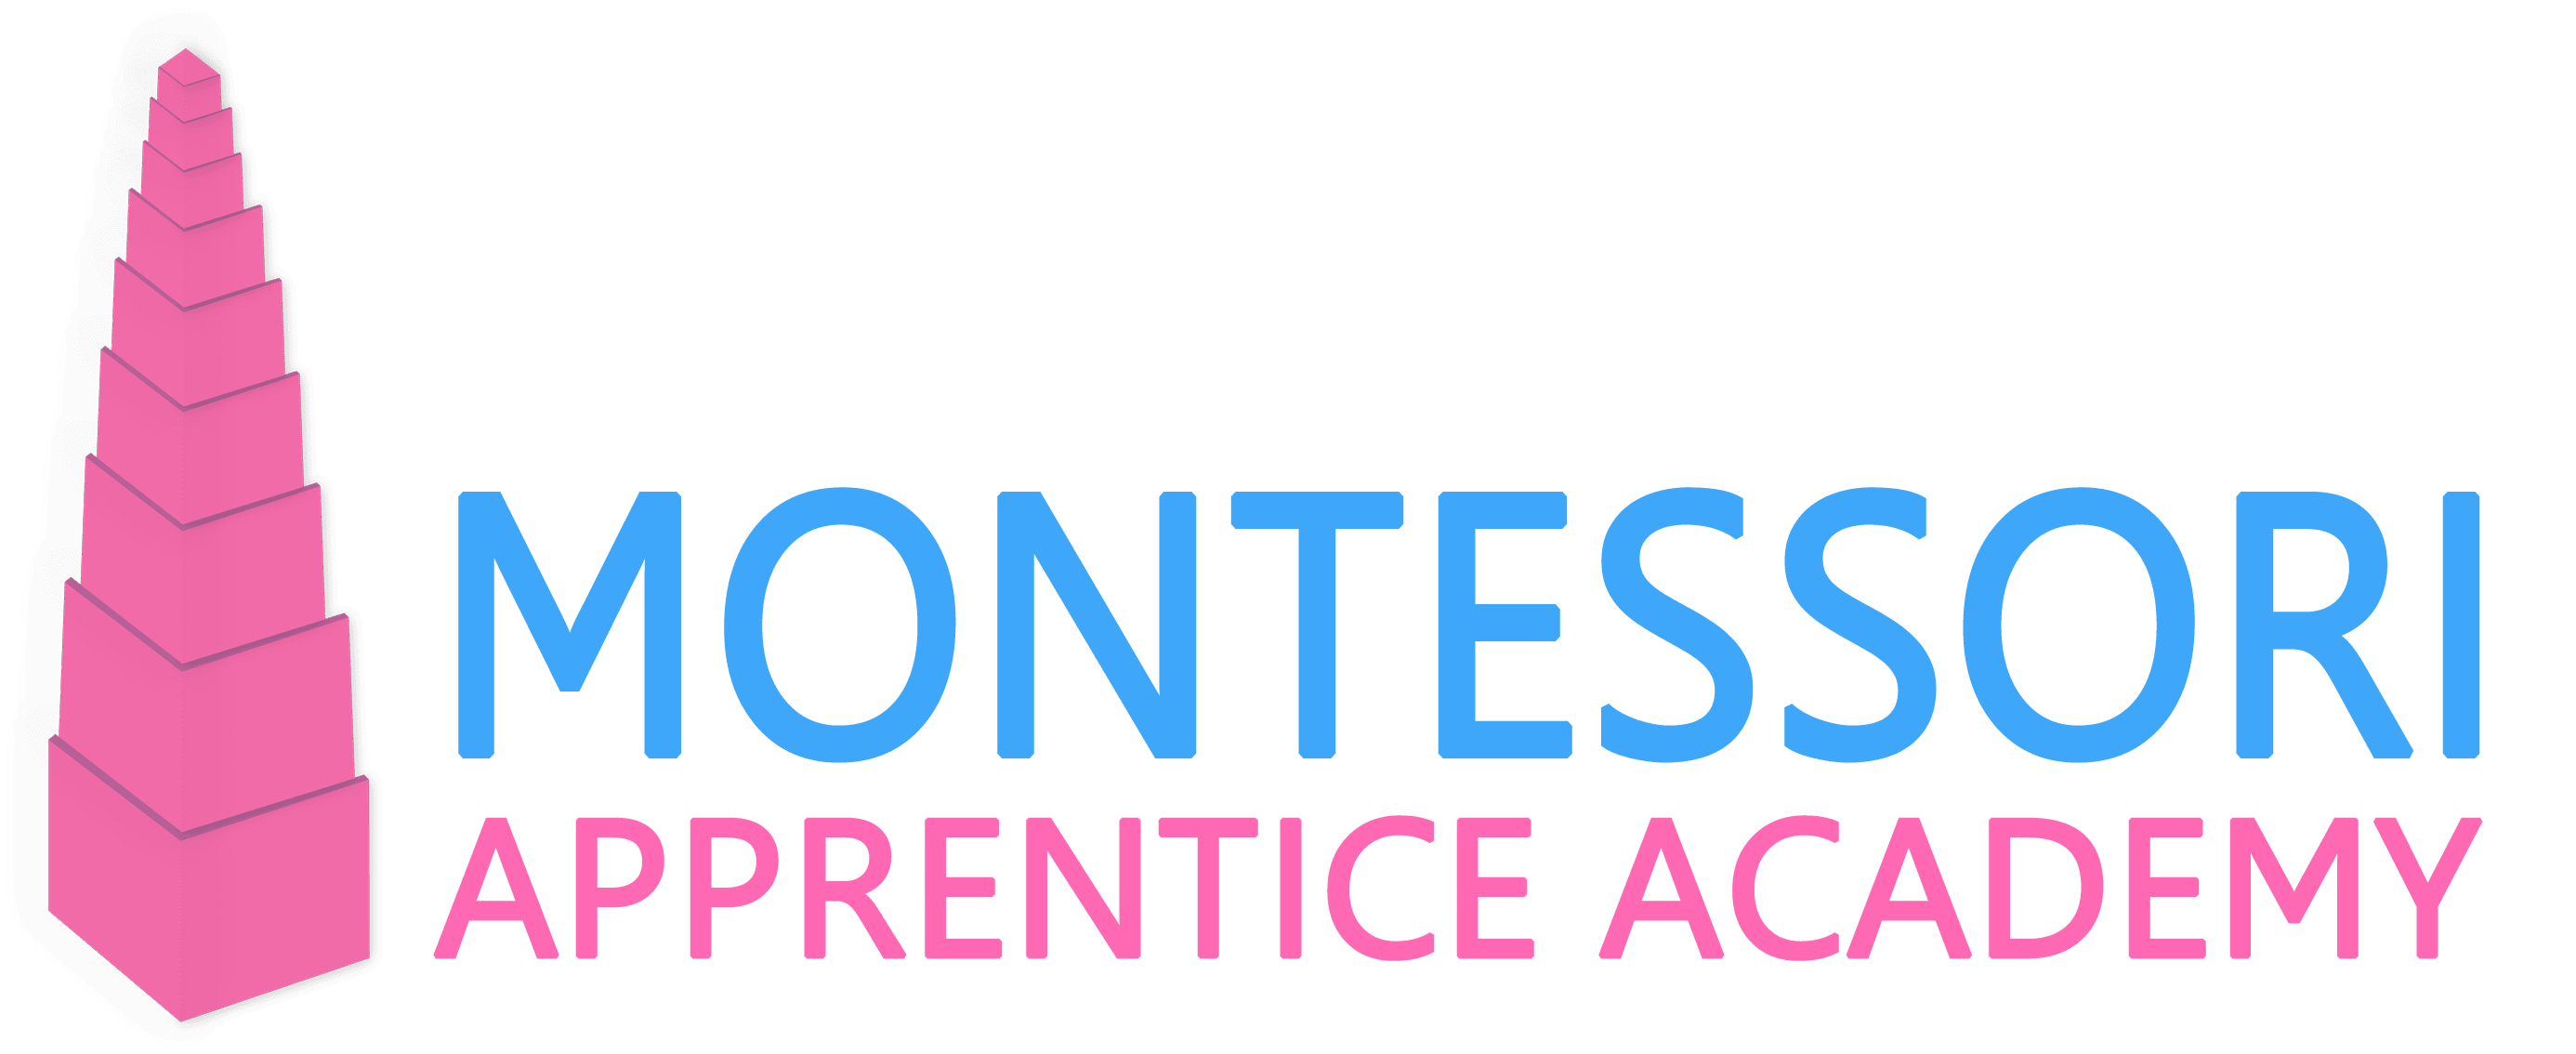 Montessori Apprentice Academy logo